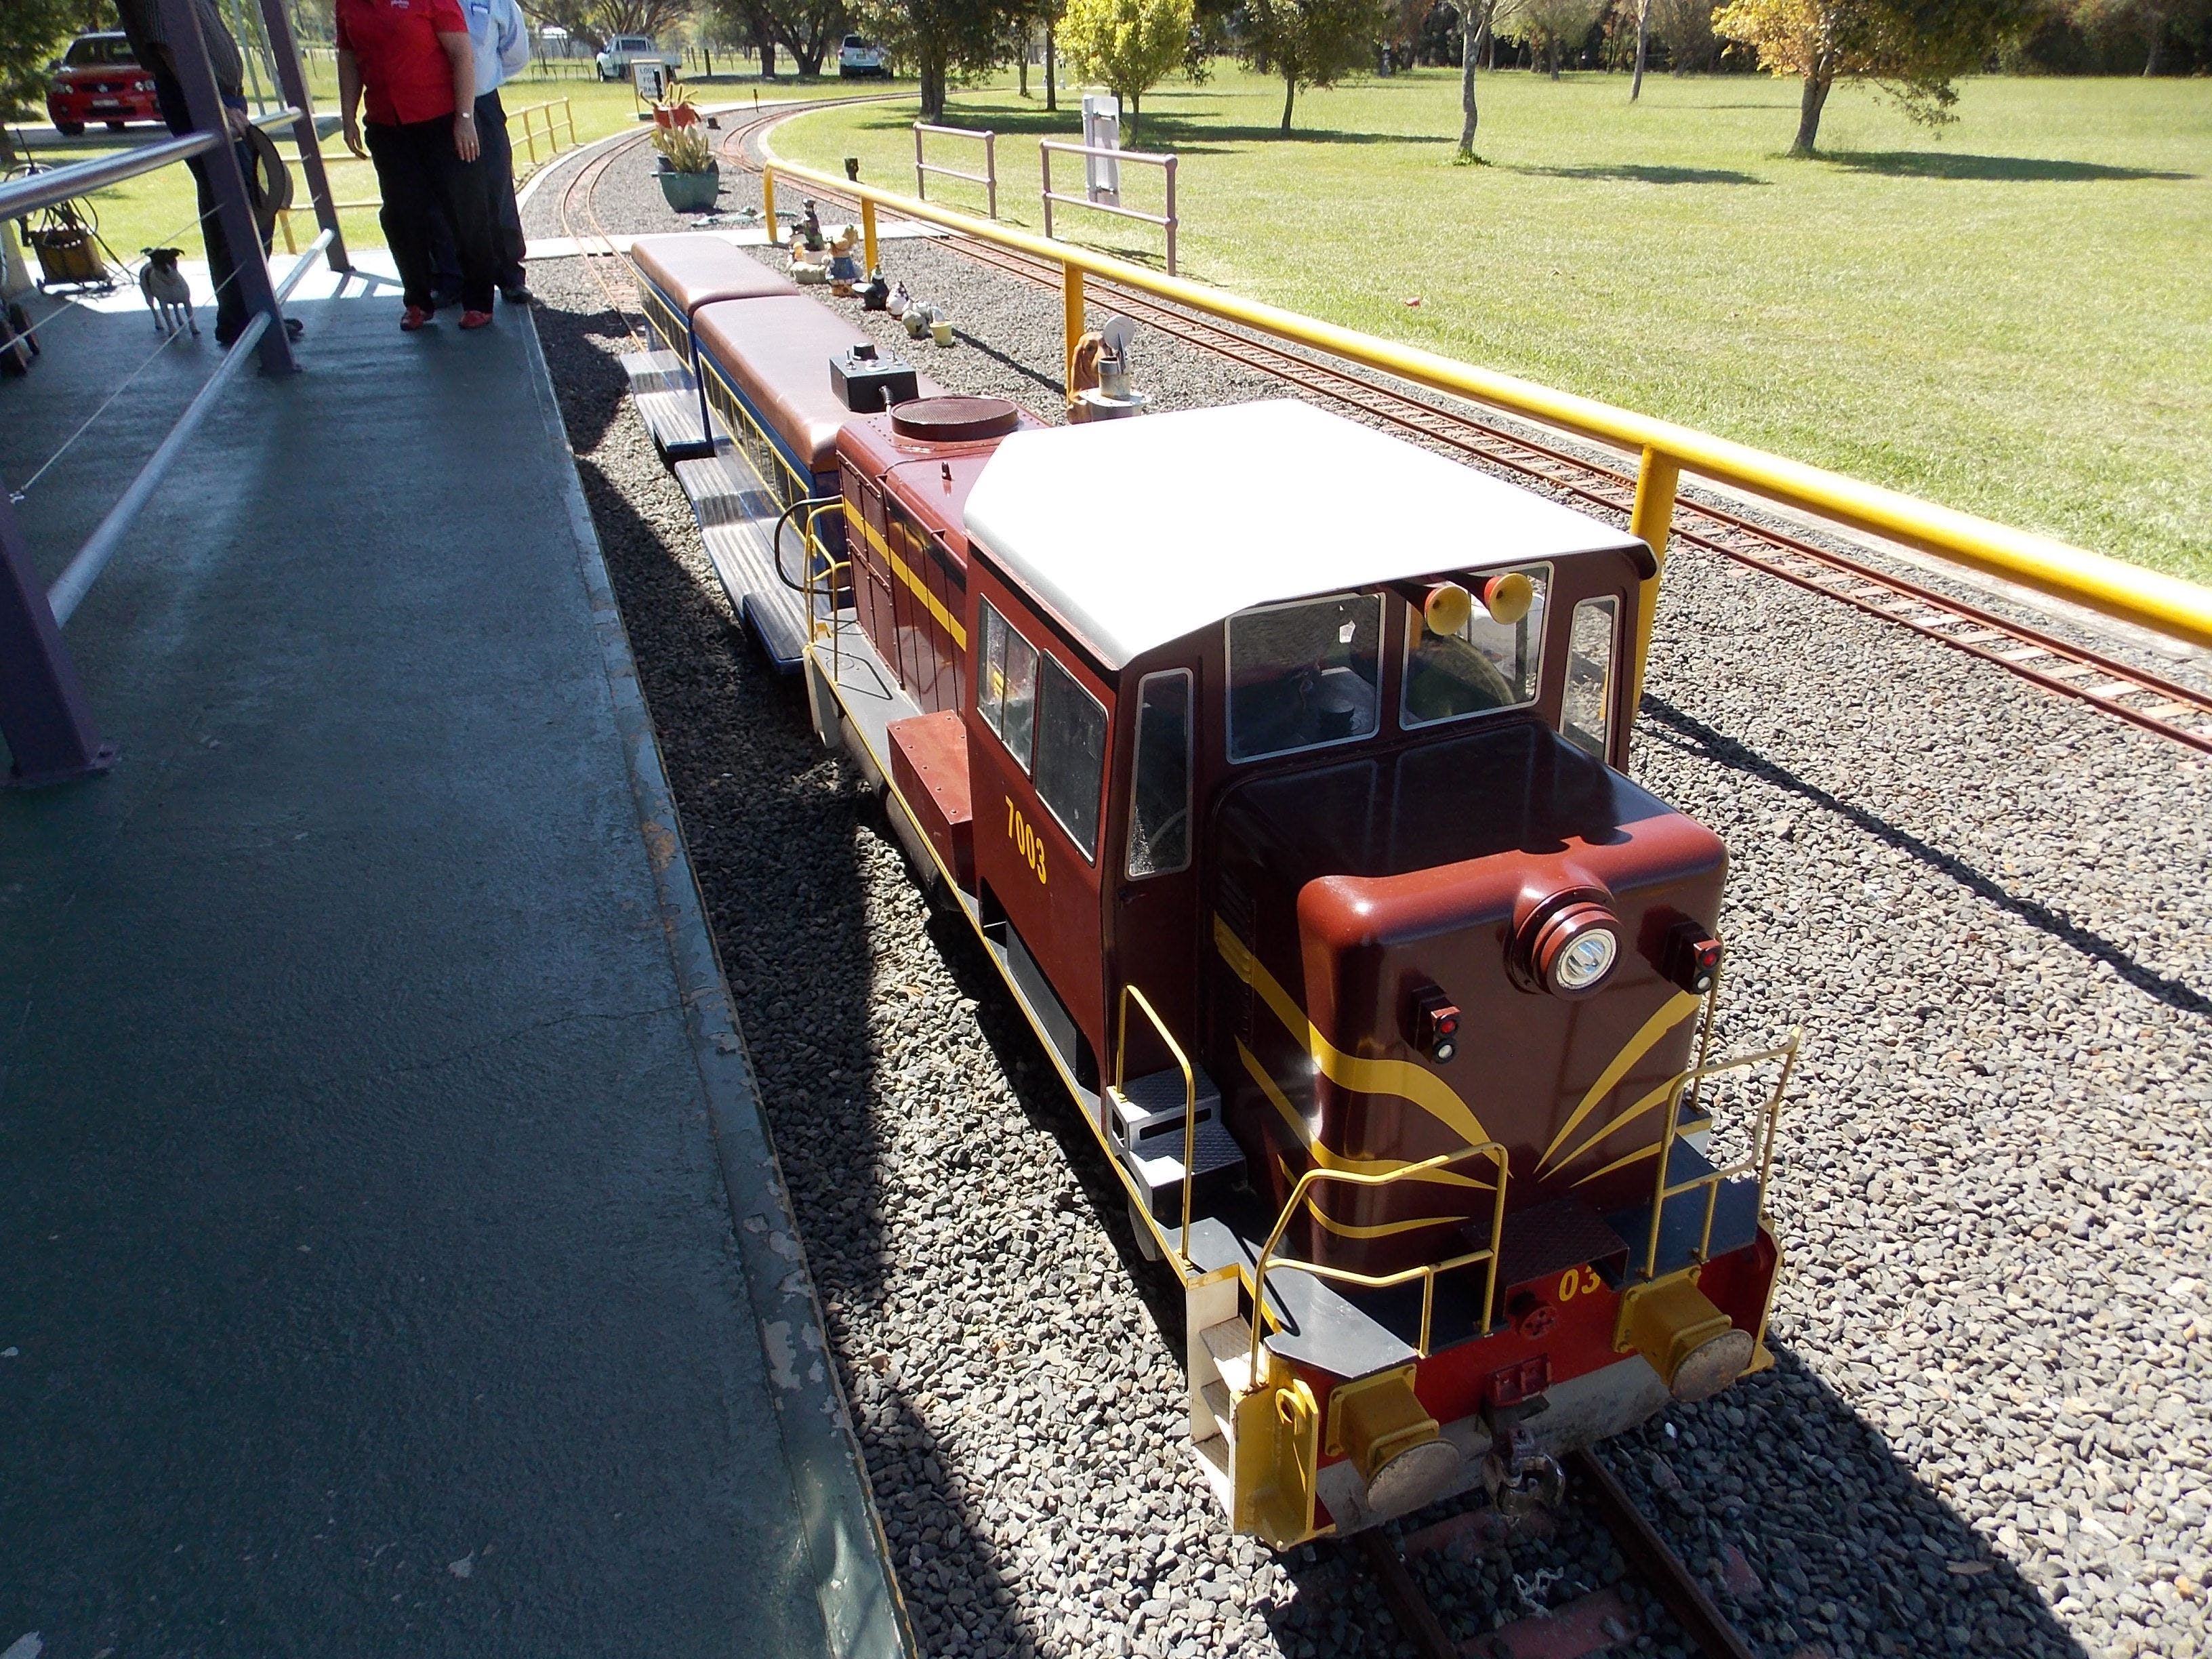 Penwood Miniature Railway - Accommodation Rockhampton